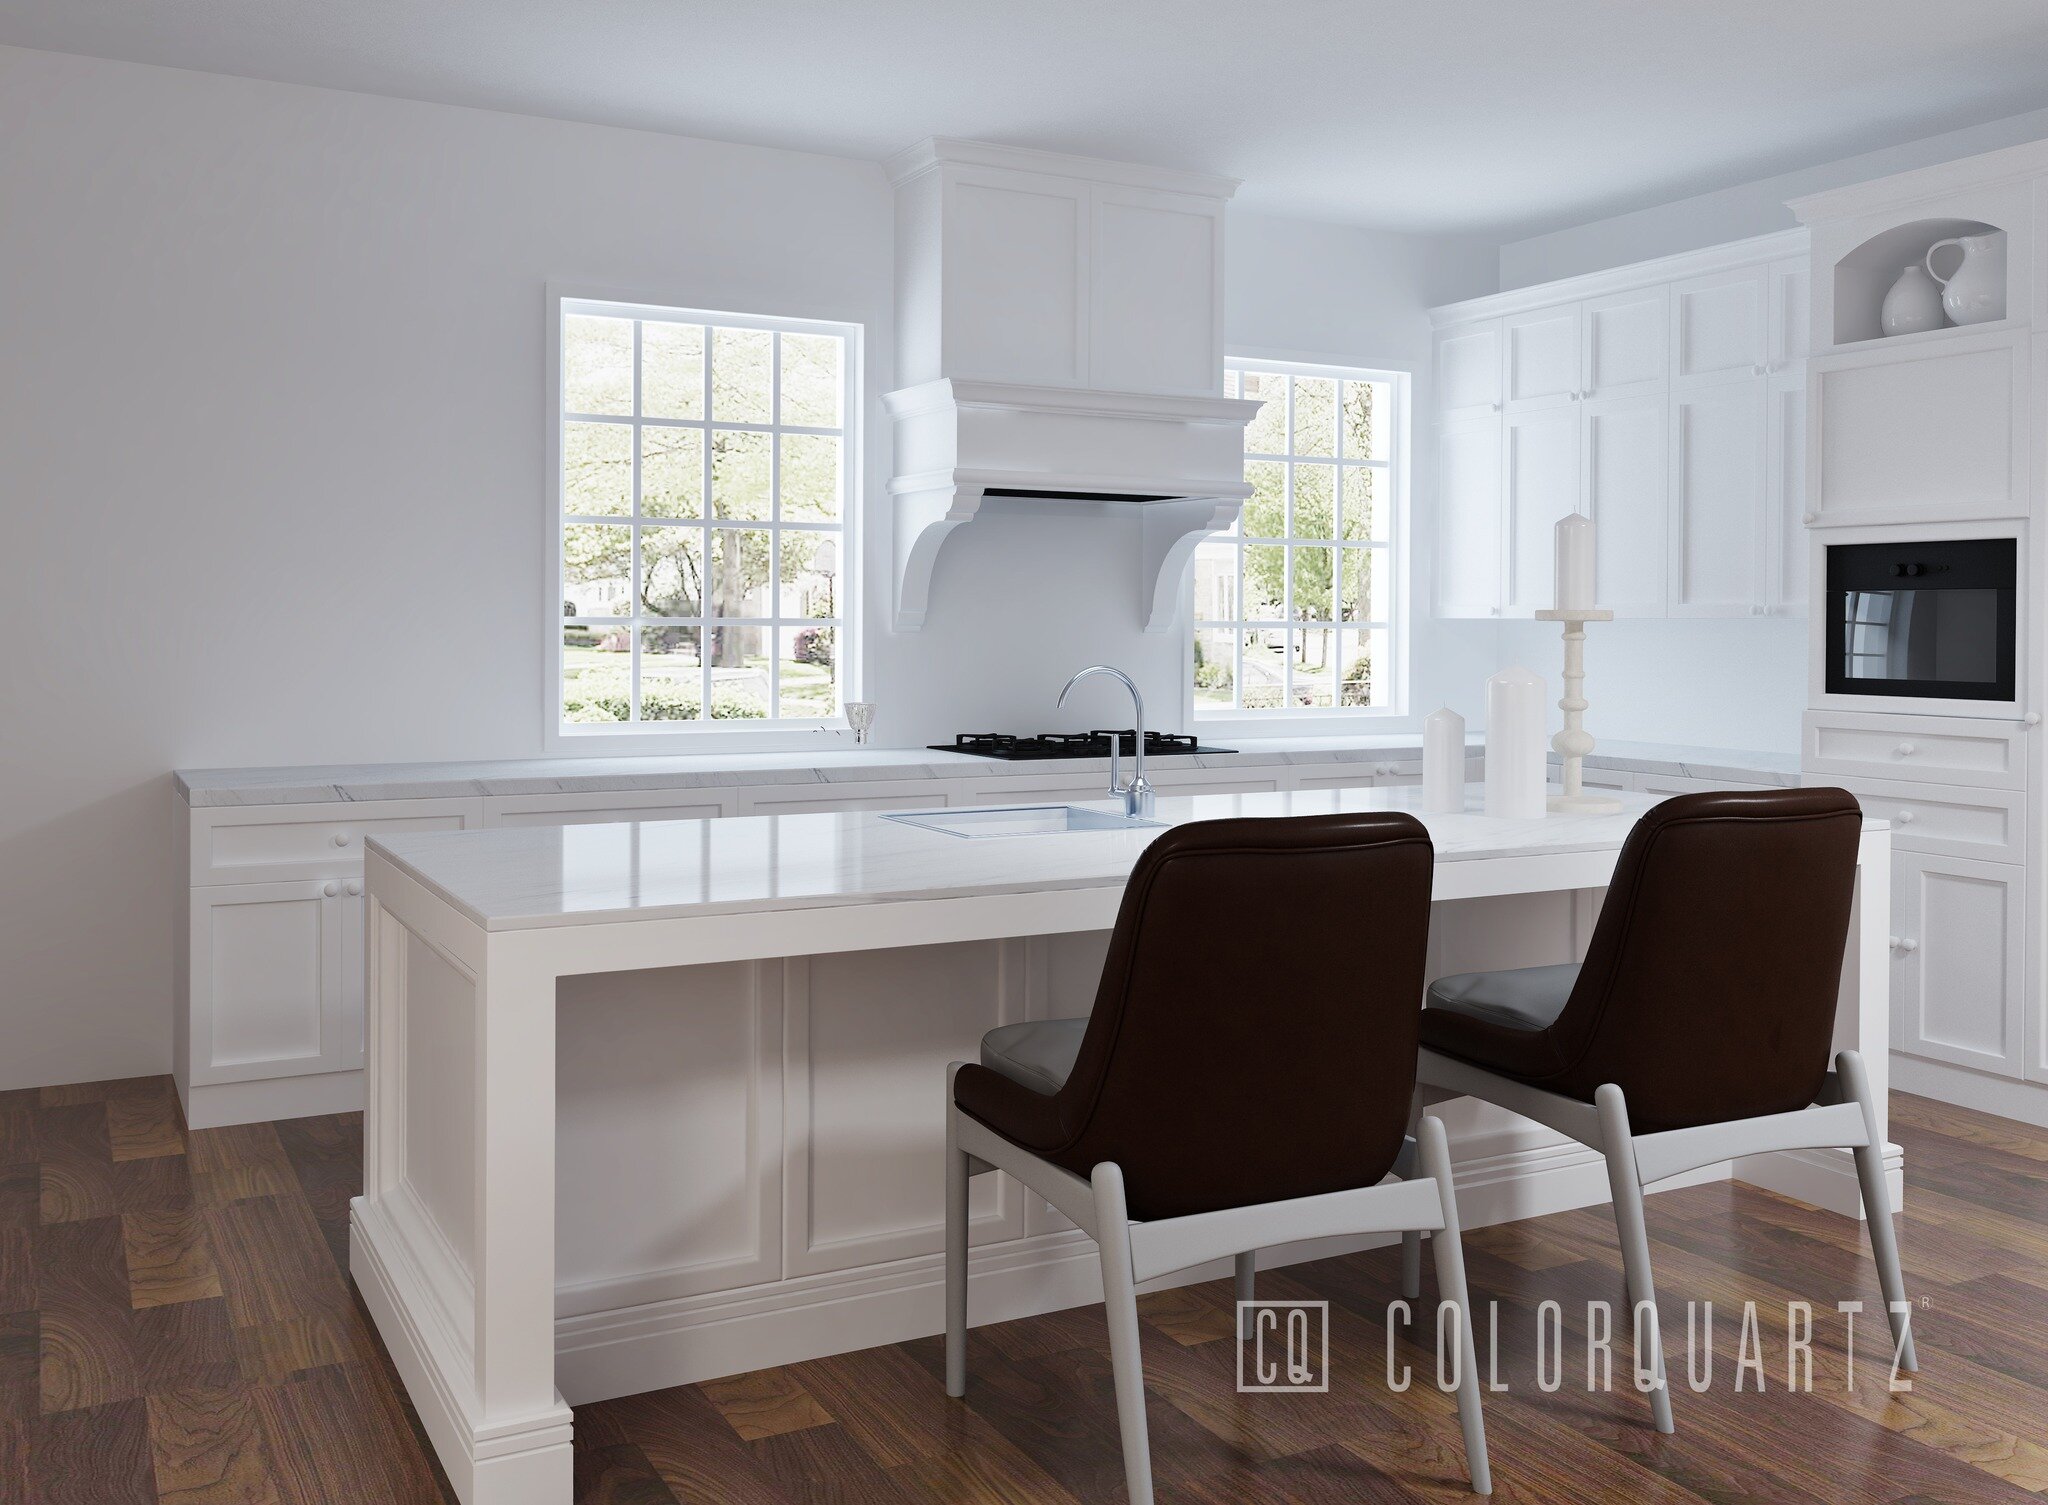 CQ975 Calacatta Bottega
Adding a touch of luxury to any space, perfecting the final touch.

Discover now: http://colorquartz.com

#Colorquartz #CQ #CQ975 #CalacattaBottega #homedecorating #kitchen #interiors #kitchenremodel #kitchengoals #kitchendesi